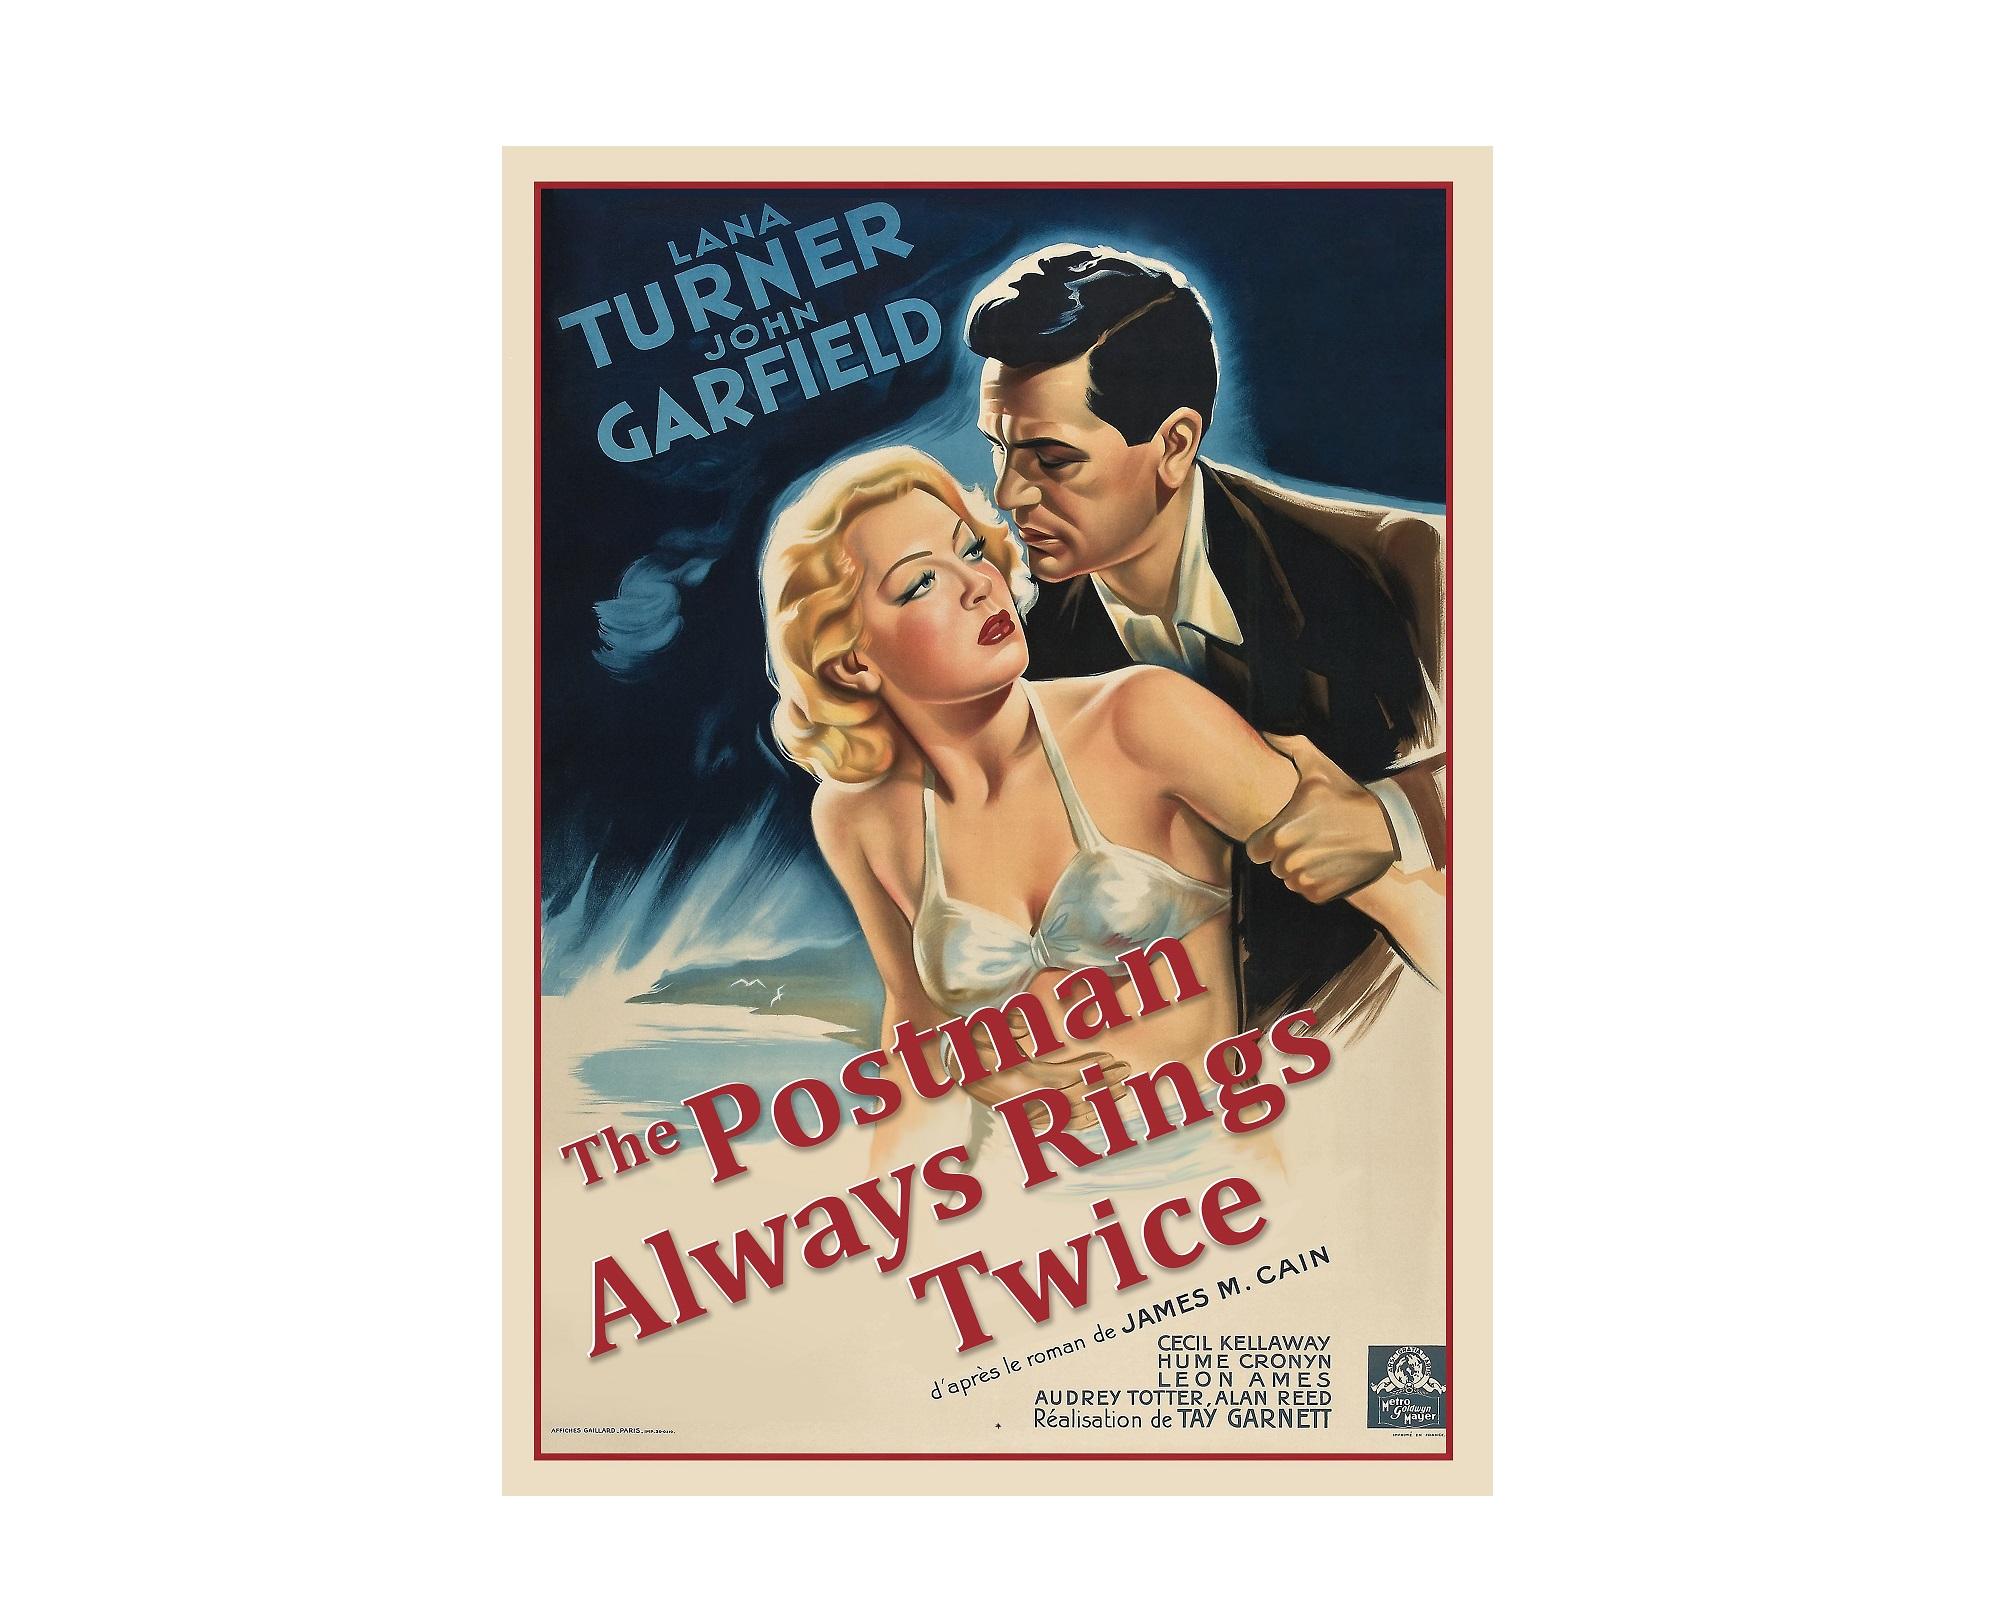 American The Postman Always Rings Twice after Vintage Movie Poster, Hollywood Regency Era For Sale